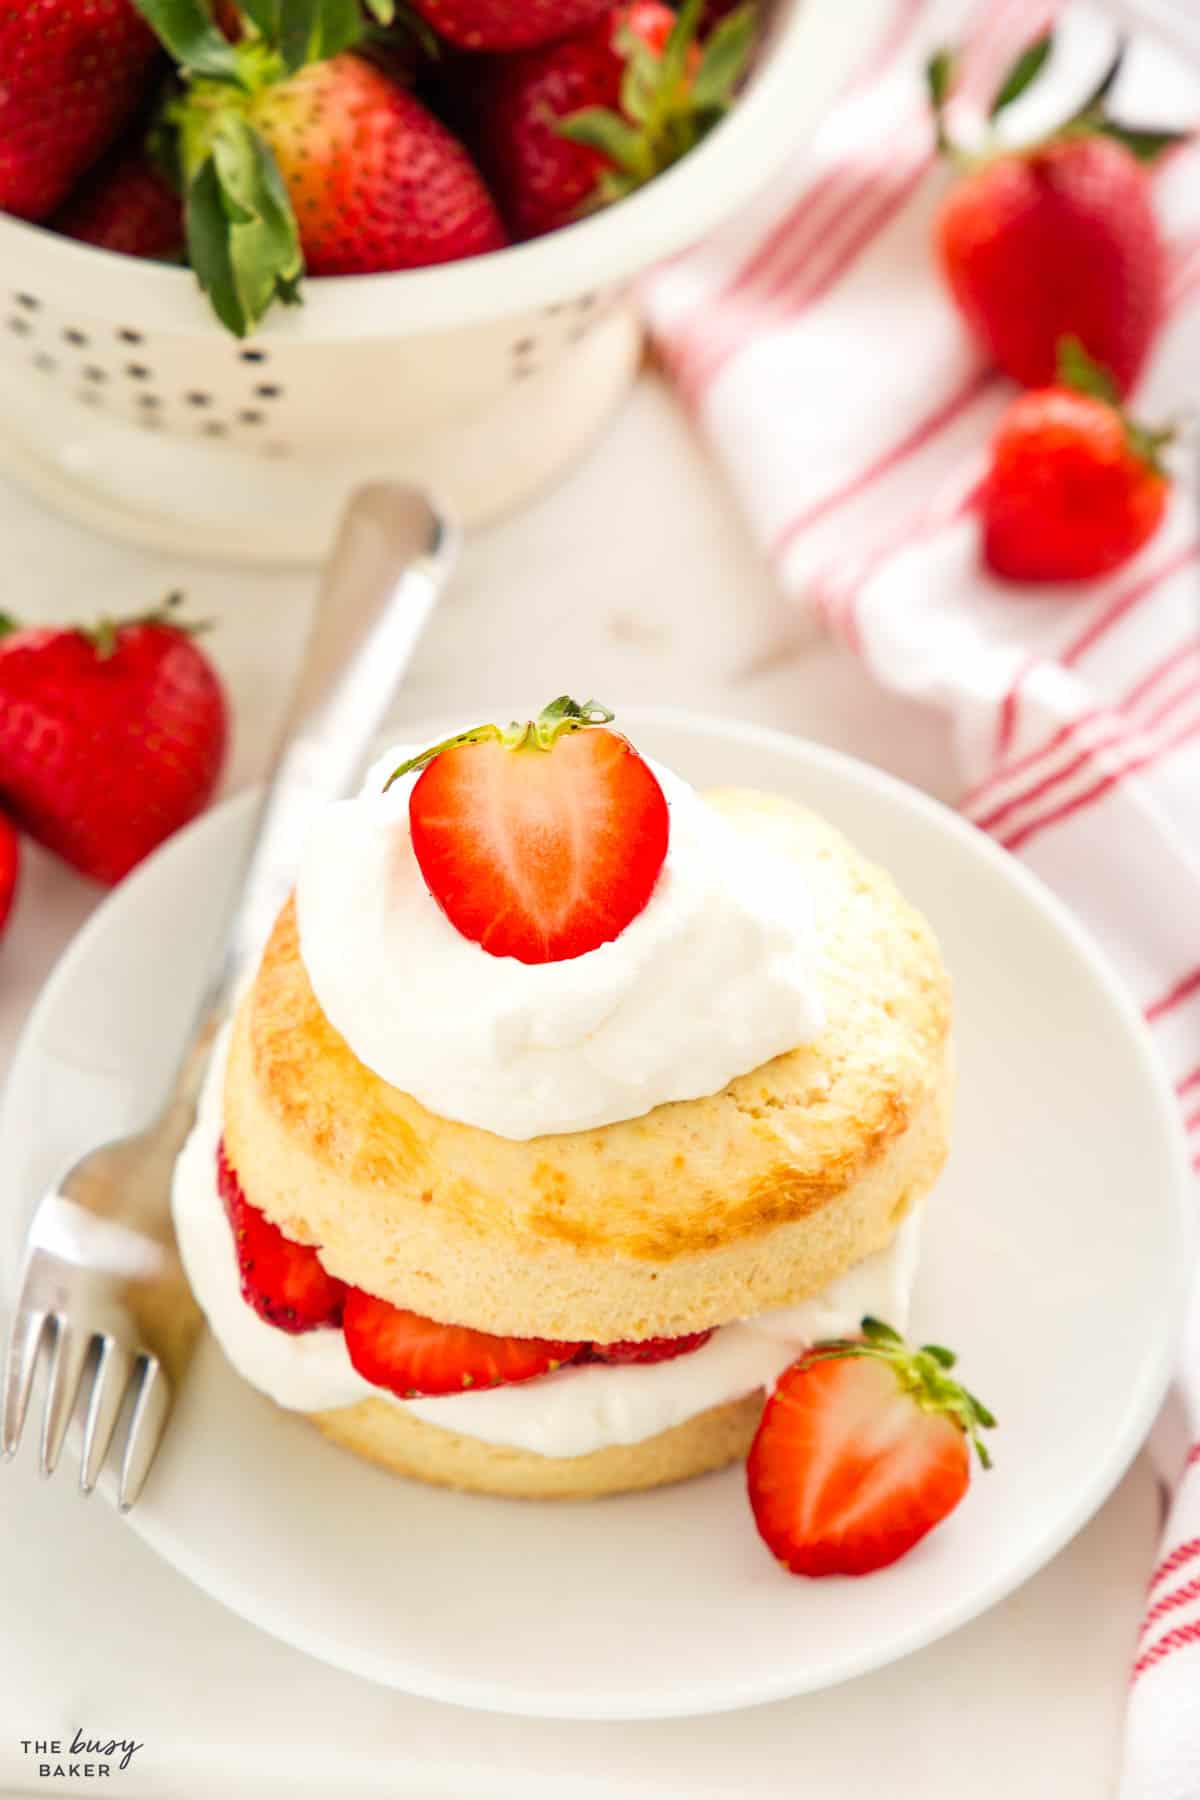 strawberry shortcake with cream and strawberries